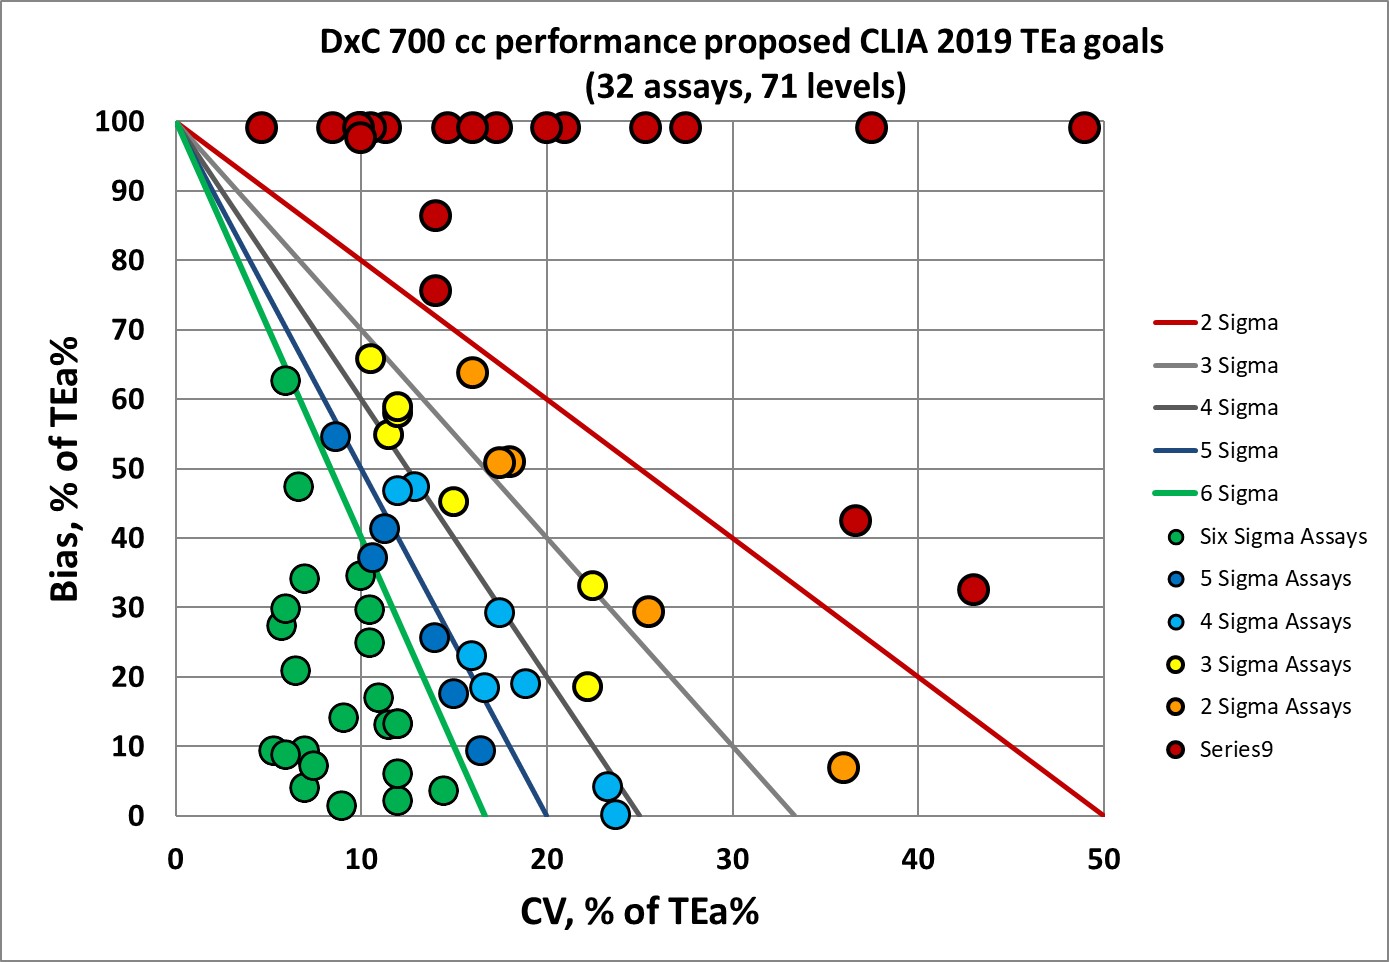 2020 dxc 700 performance according to CLIA 2019 proposed goals